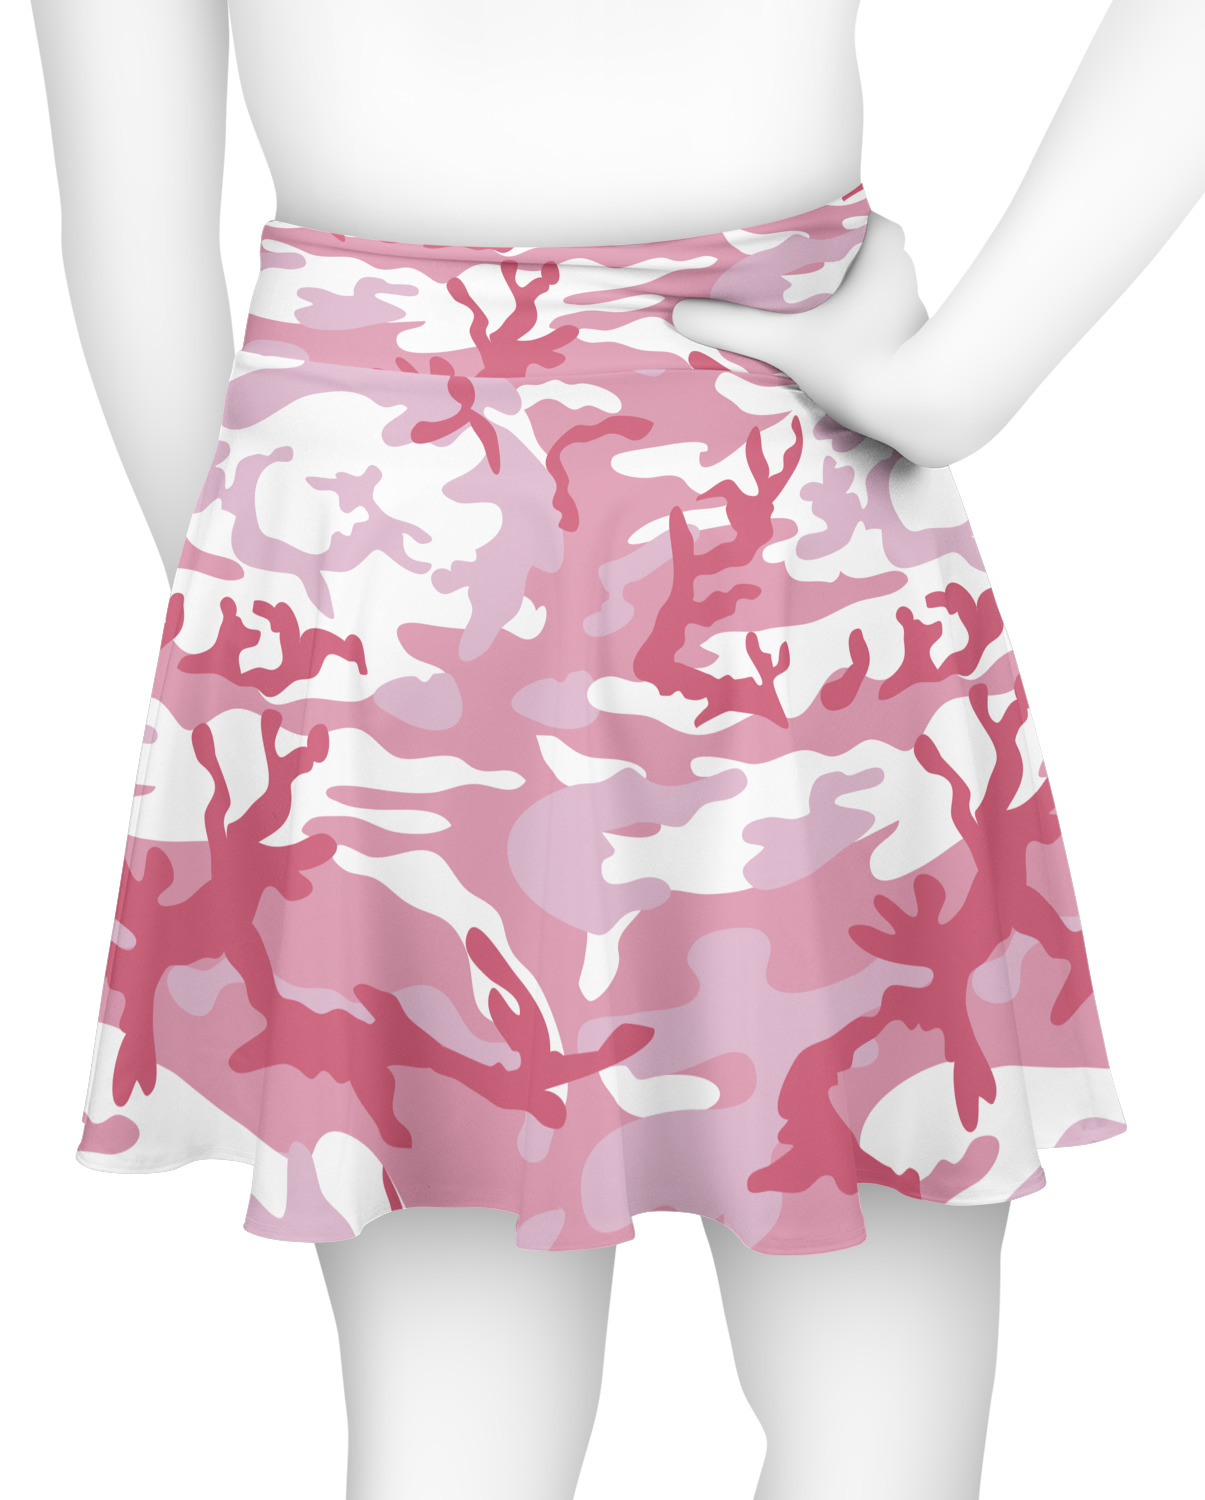 Pink Camo Skater Skirt - Medium (Personalized) - YouCustomizeIt